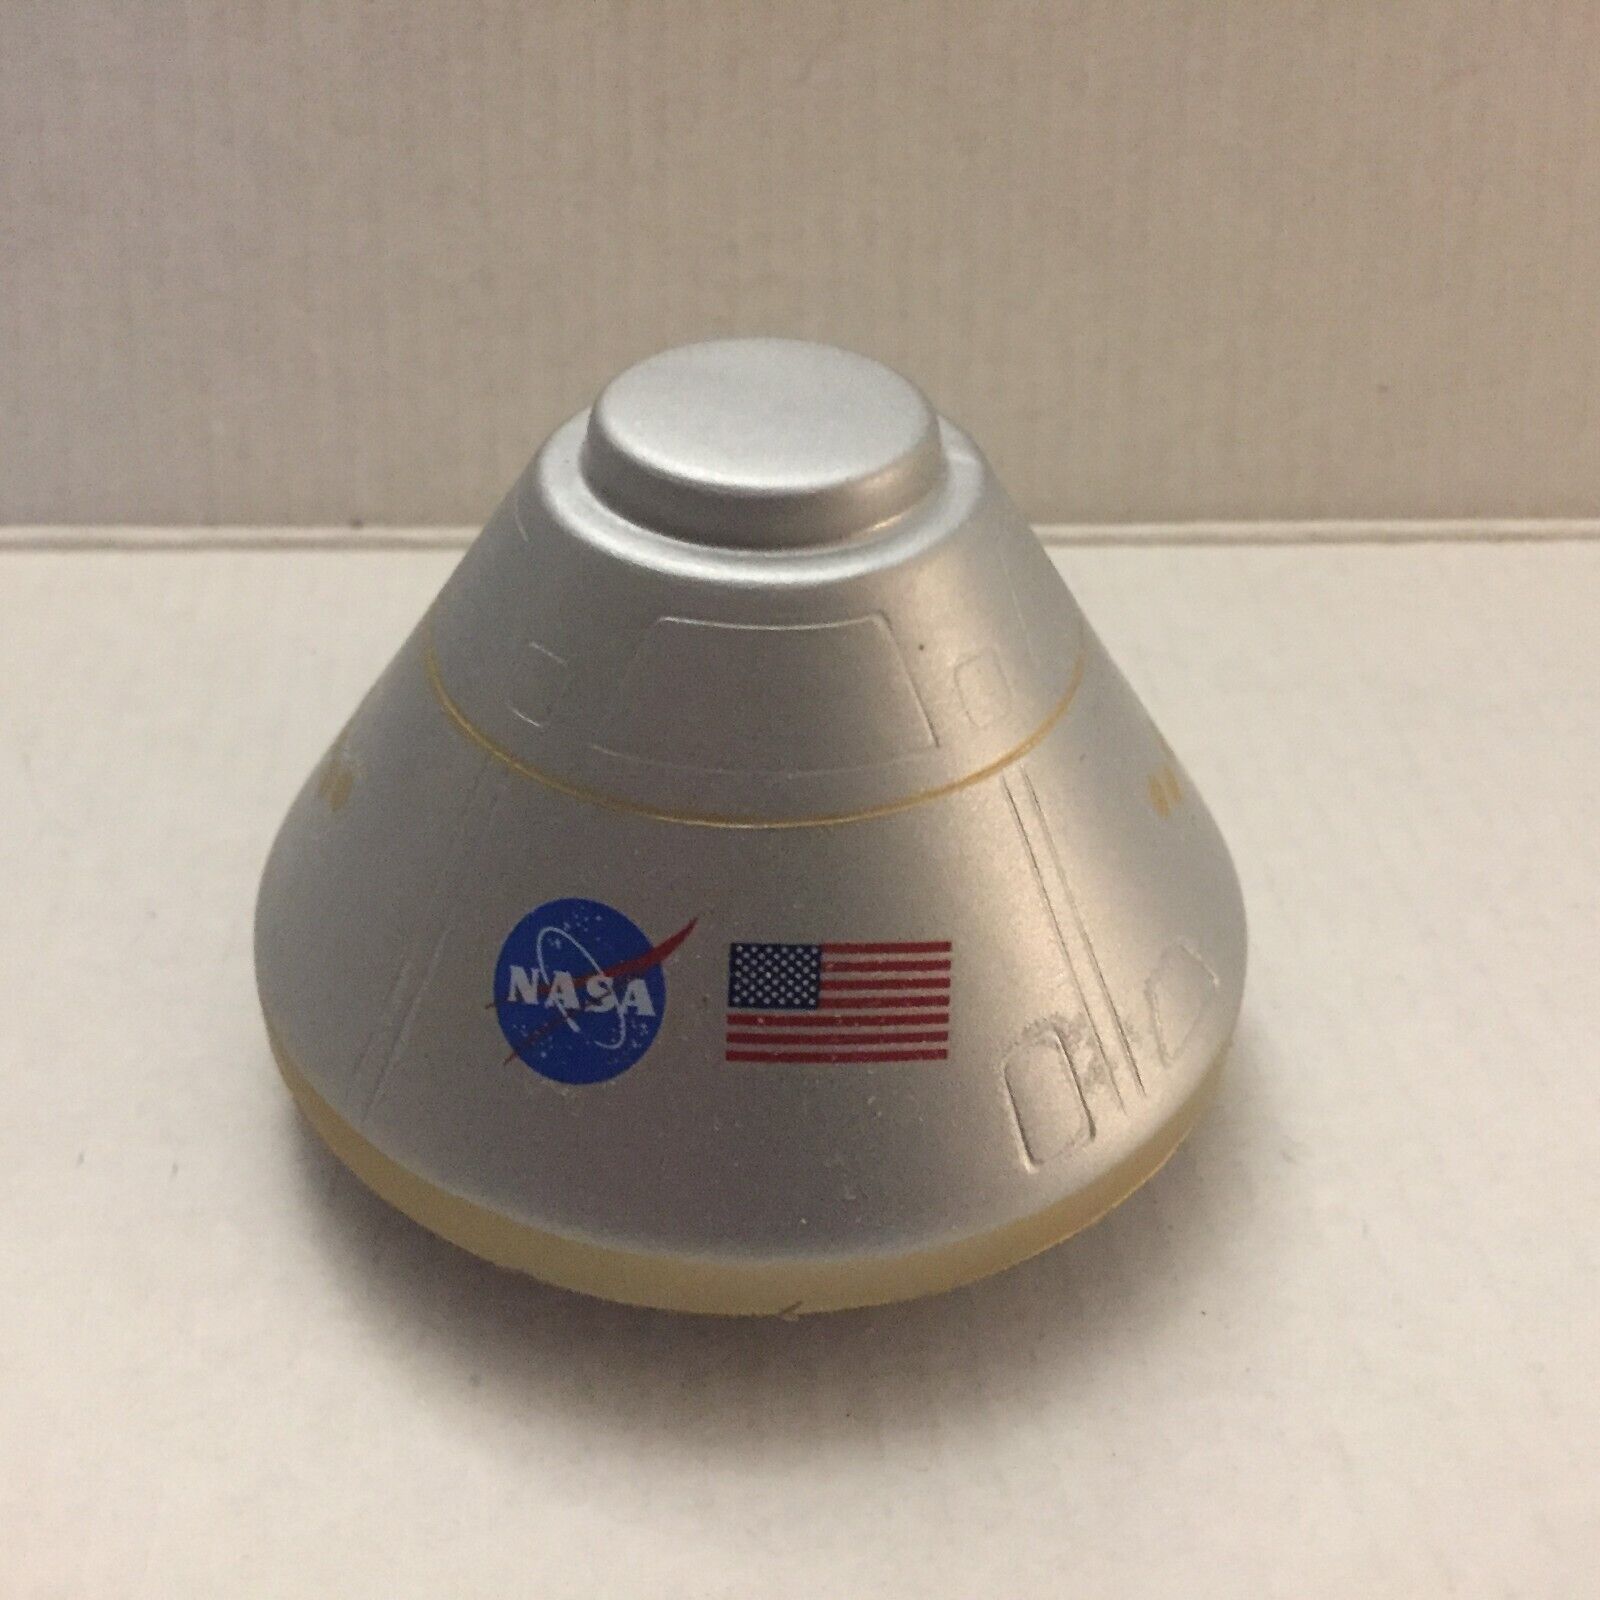 NEW Lockheed Martin Collectable NASA Capsule Stress Ball